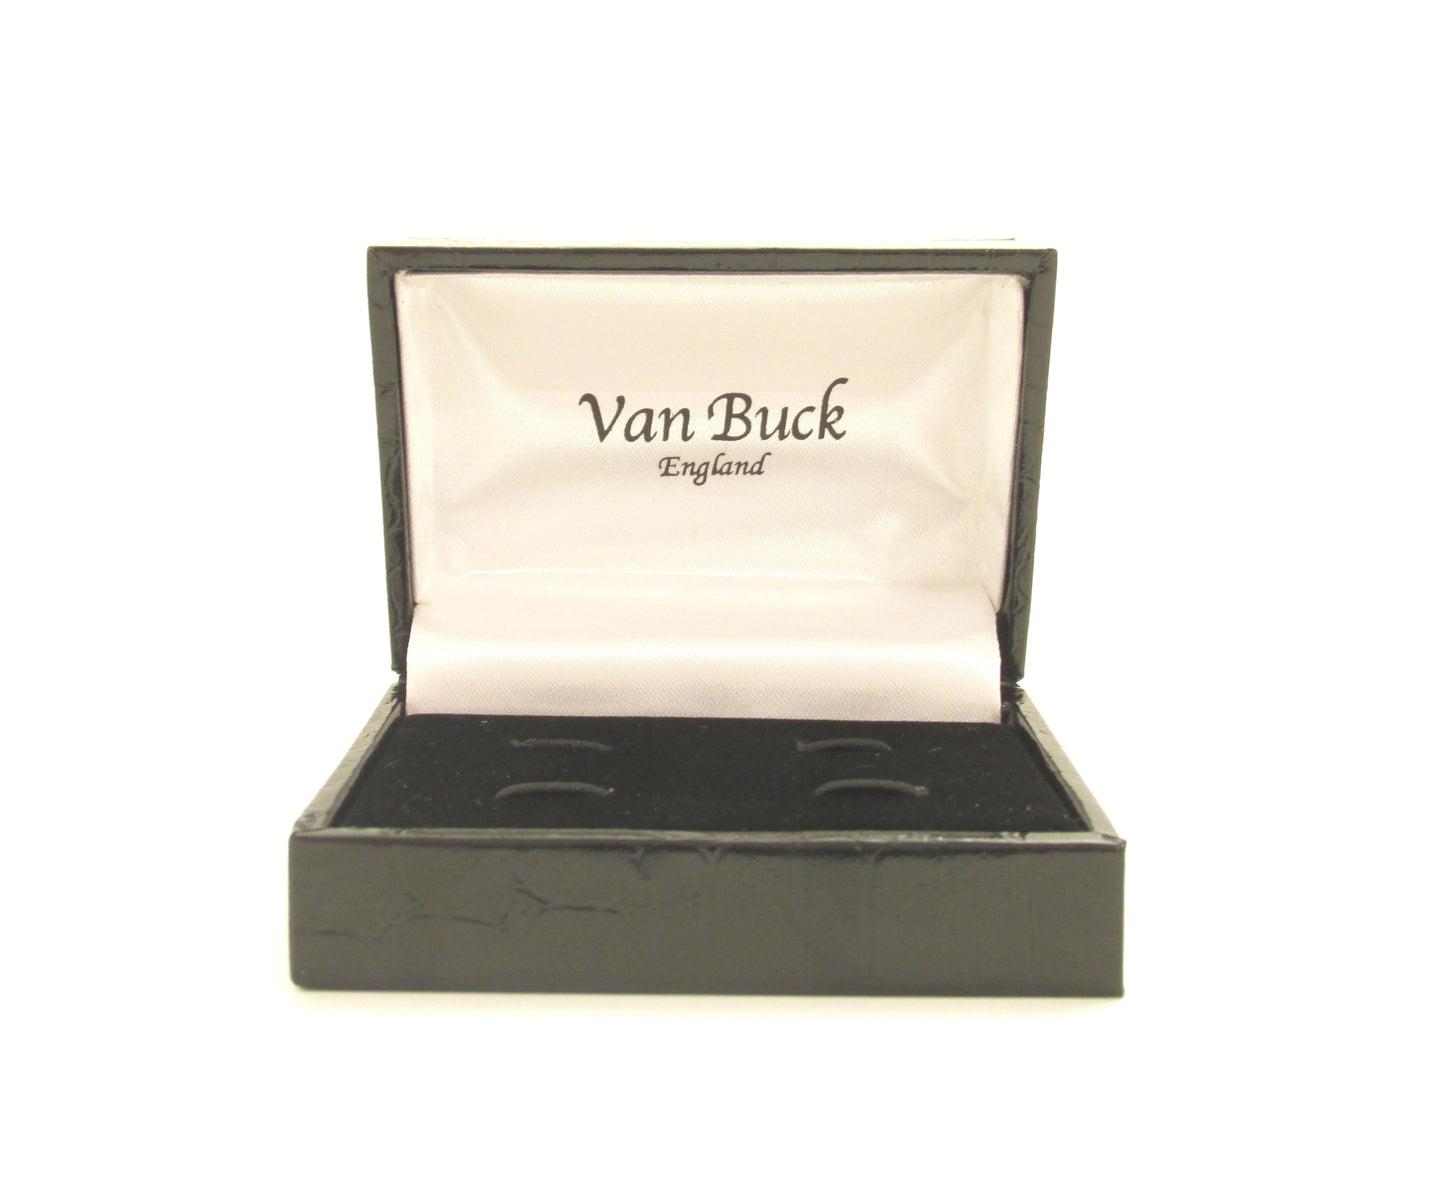 Champagne Bottle & Flutes Novelty Cufflinks by Van Buck